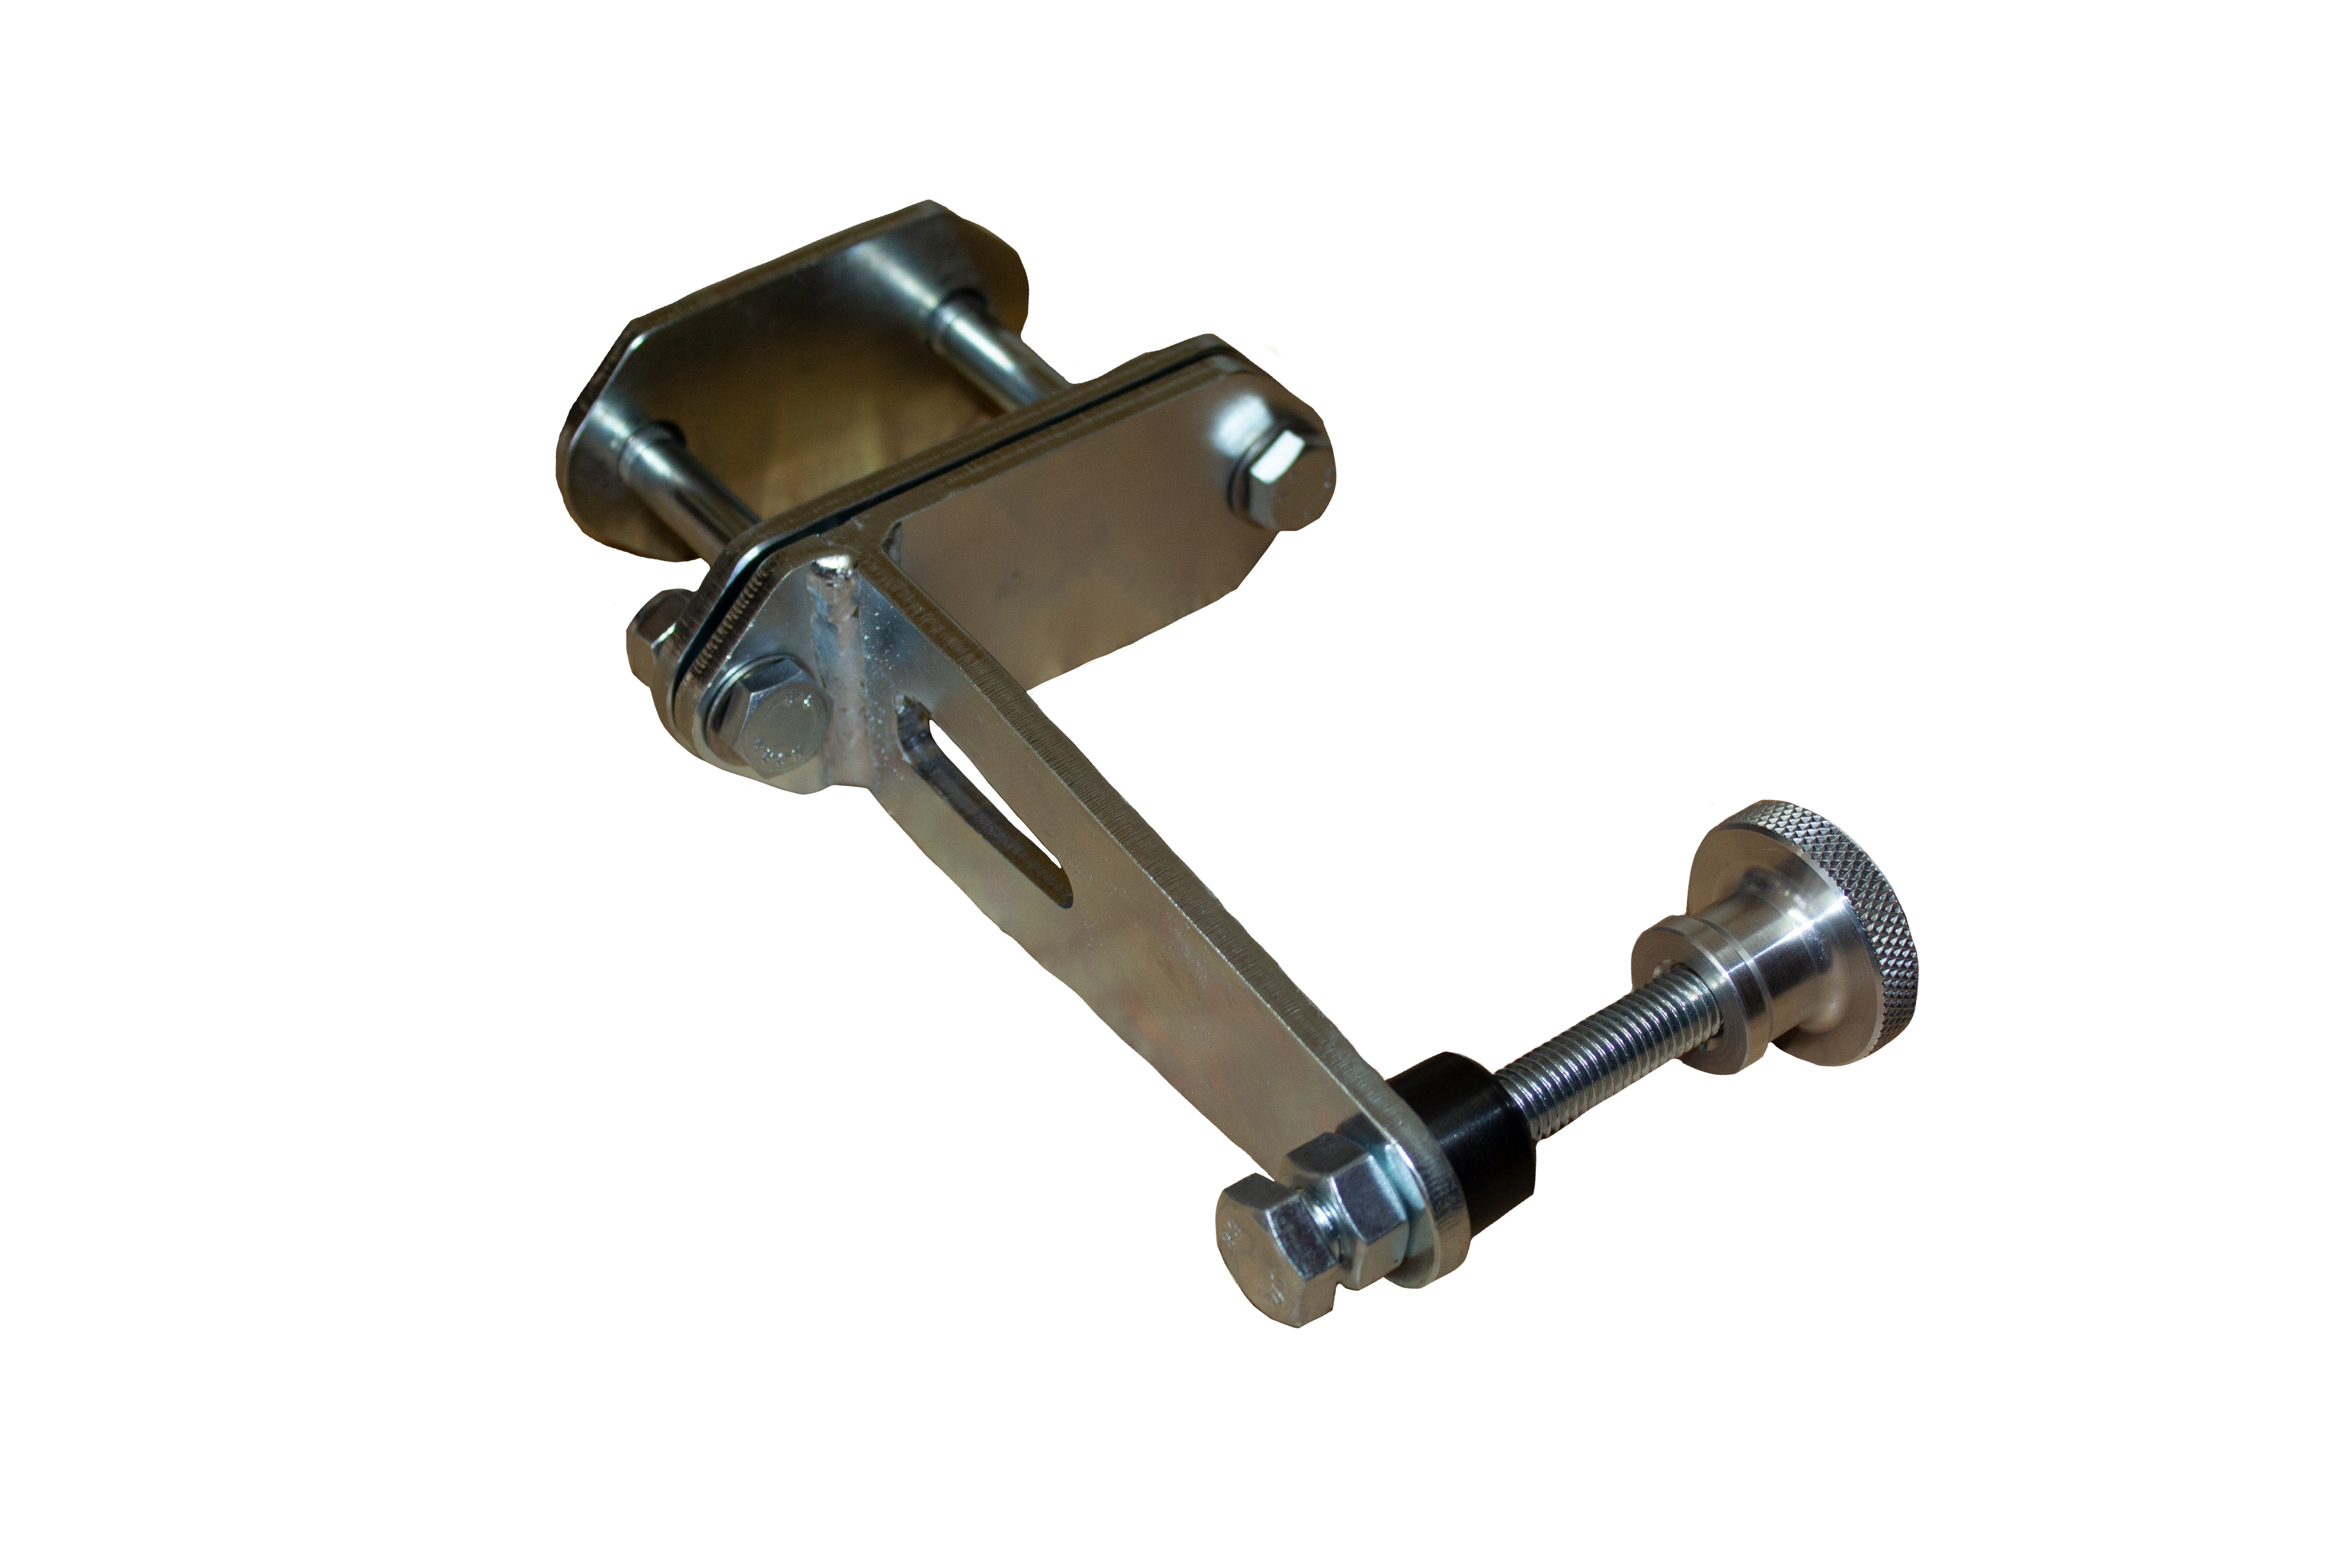 metal clamp for a tripod leg